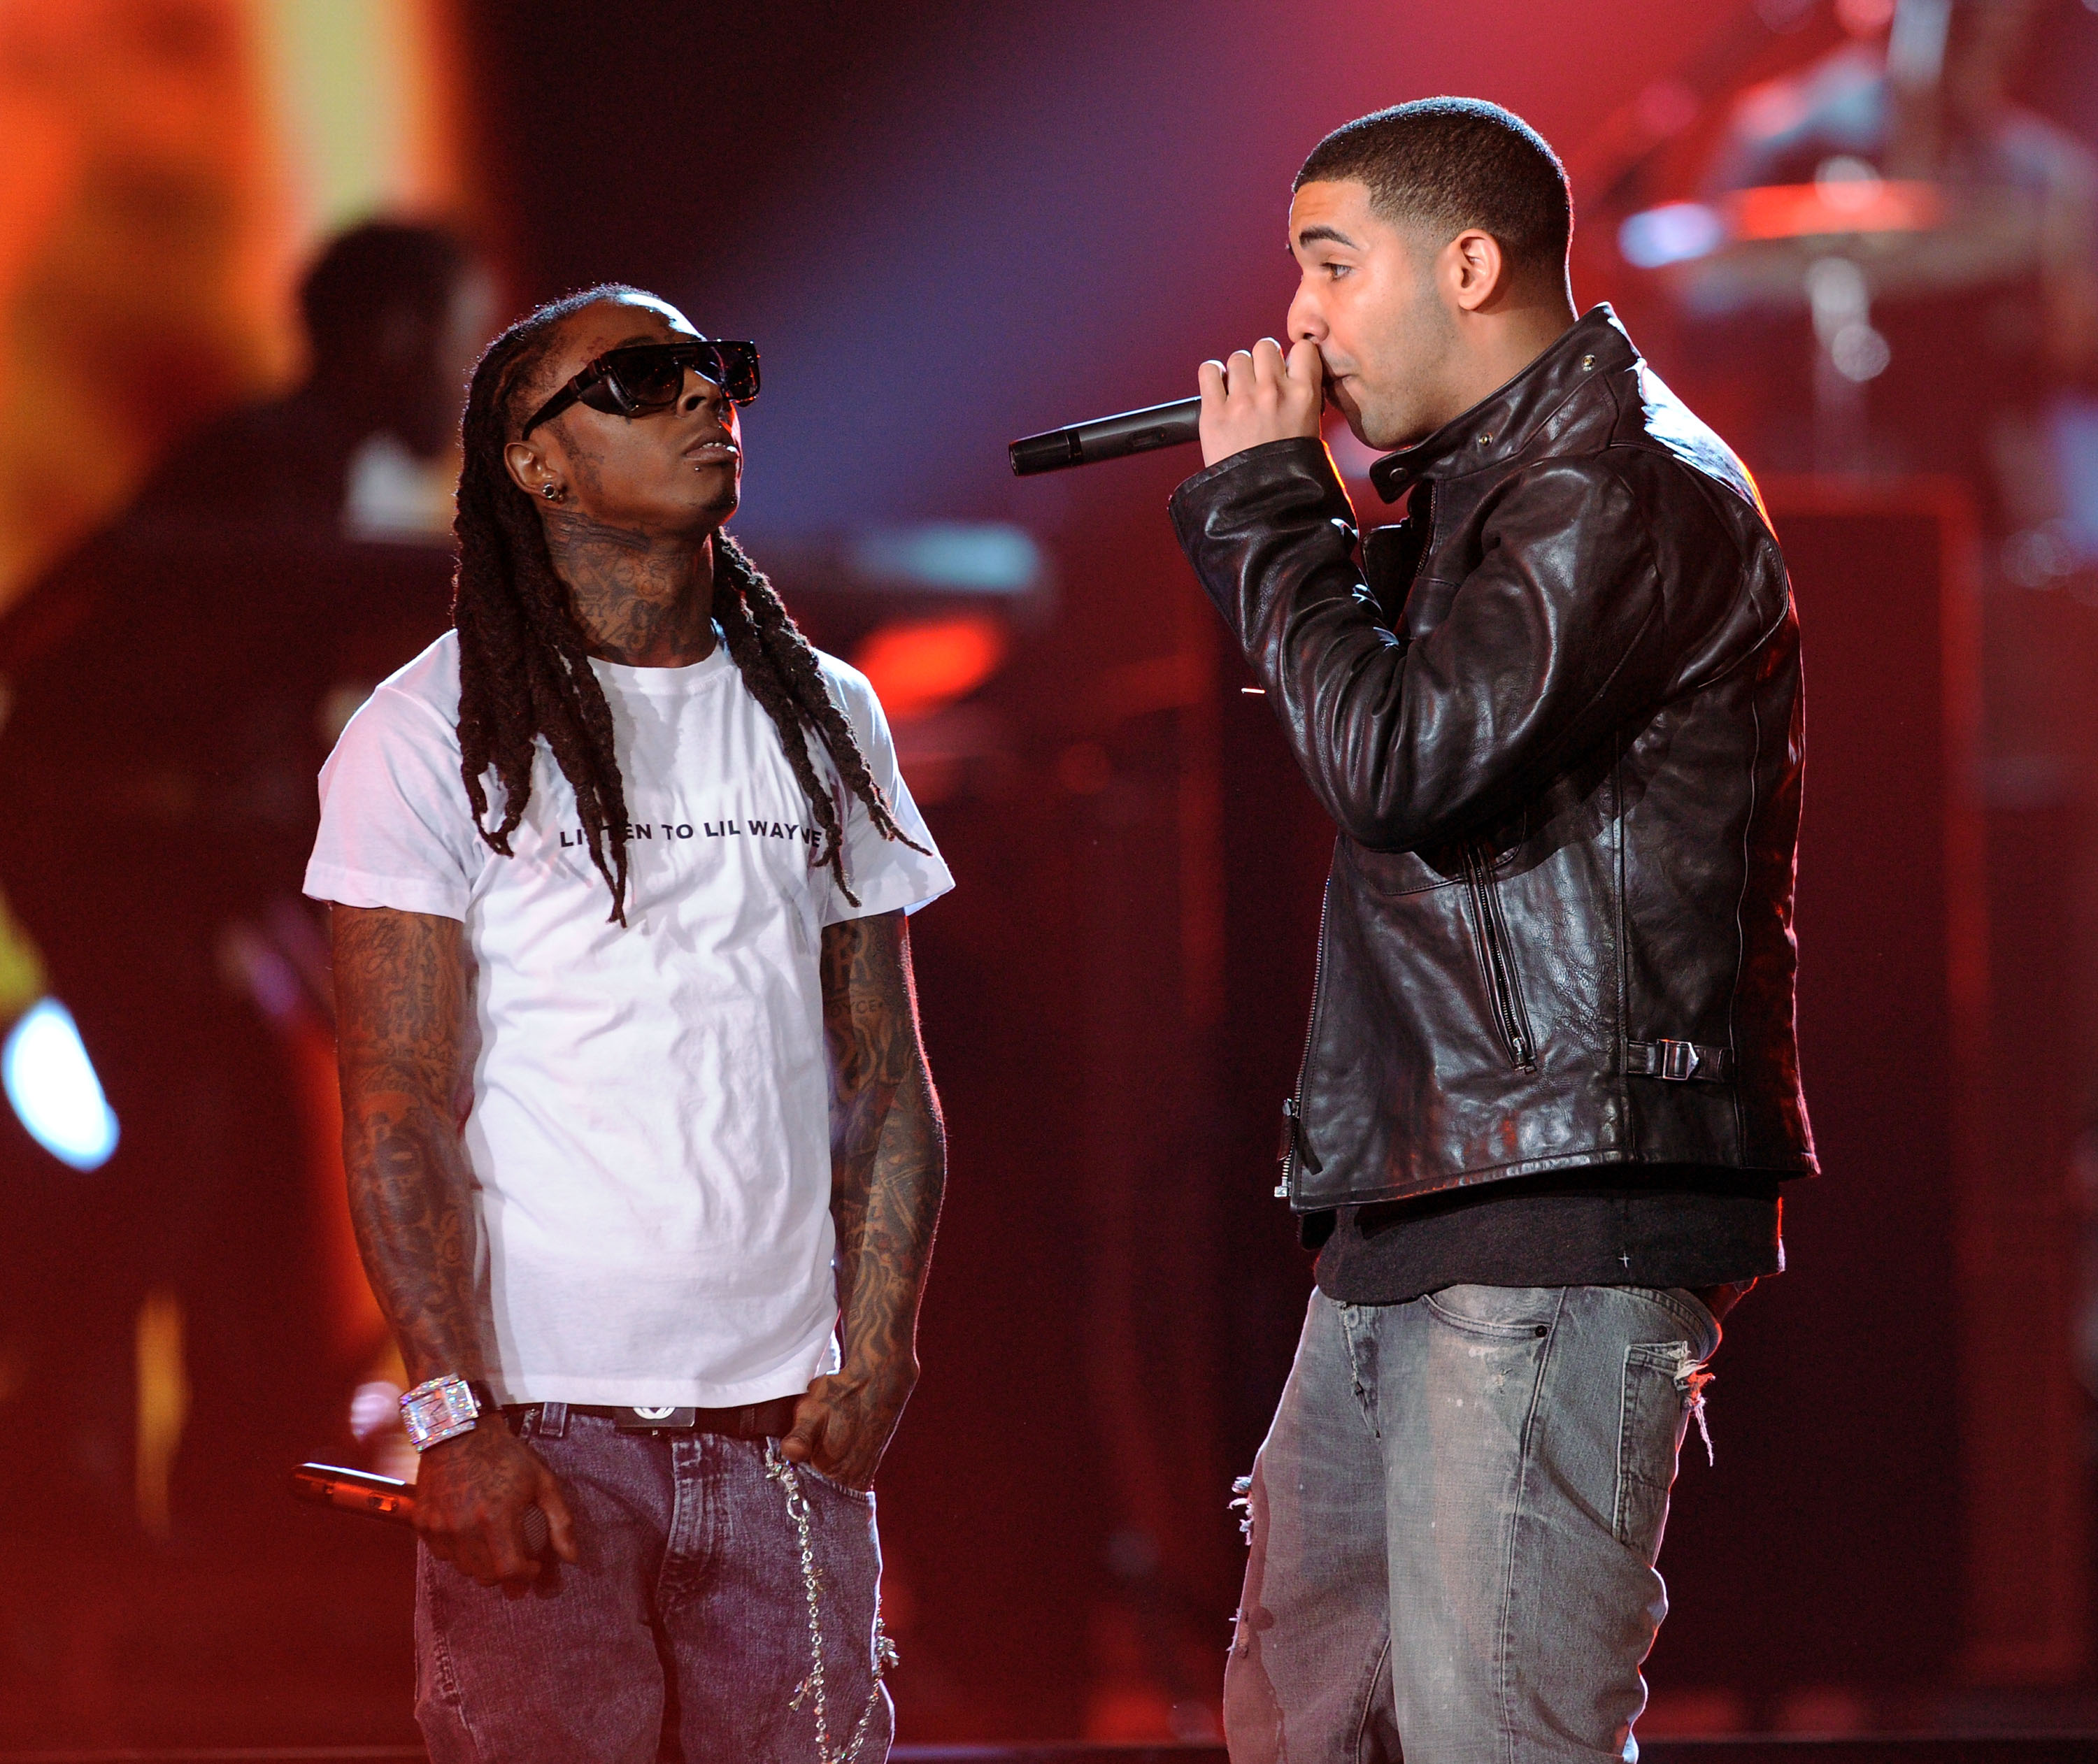 Lil Wayne and Drake performing